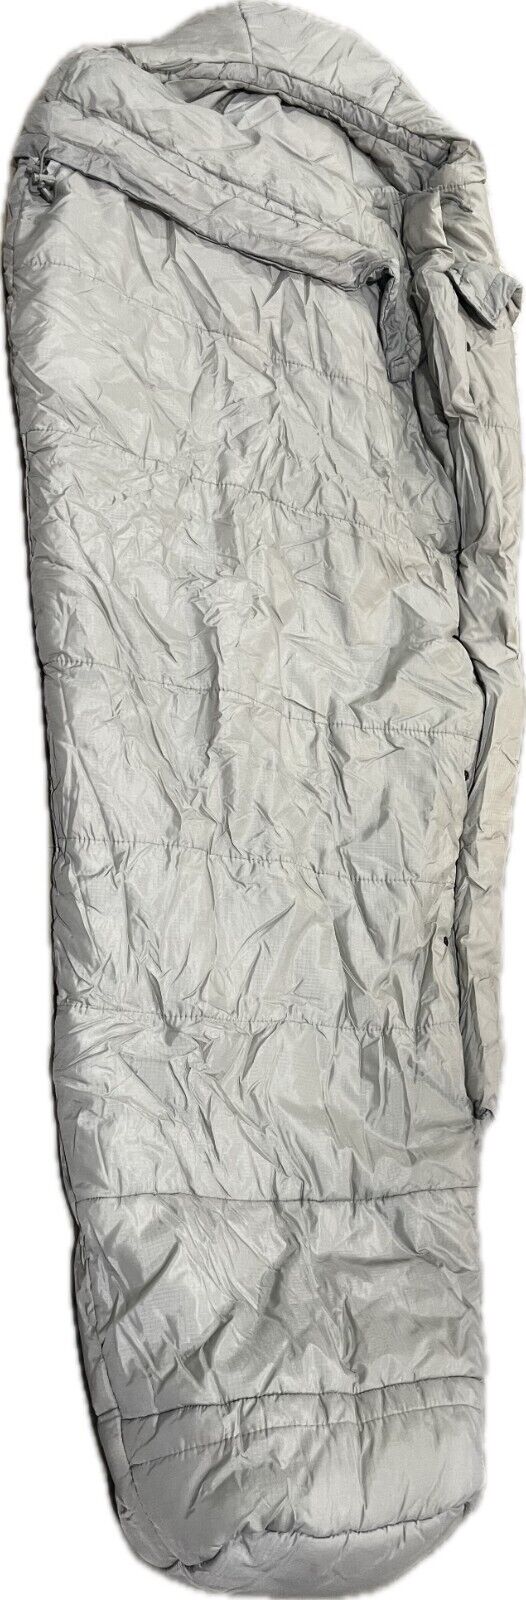 Original Military Issue Intermediate Sleeping Bag Foliage Grey MSS US Made